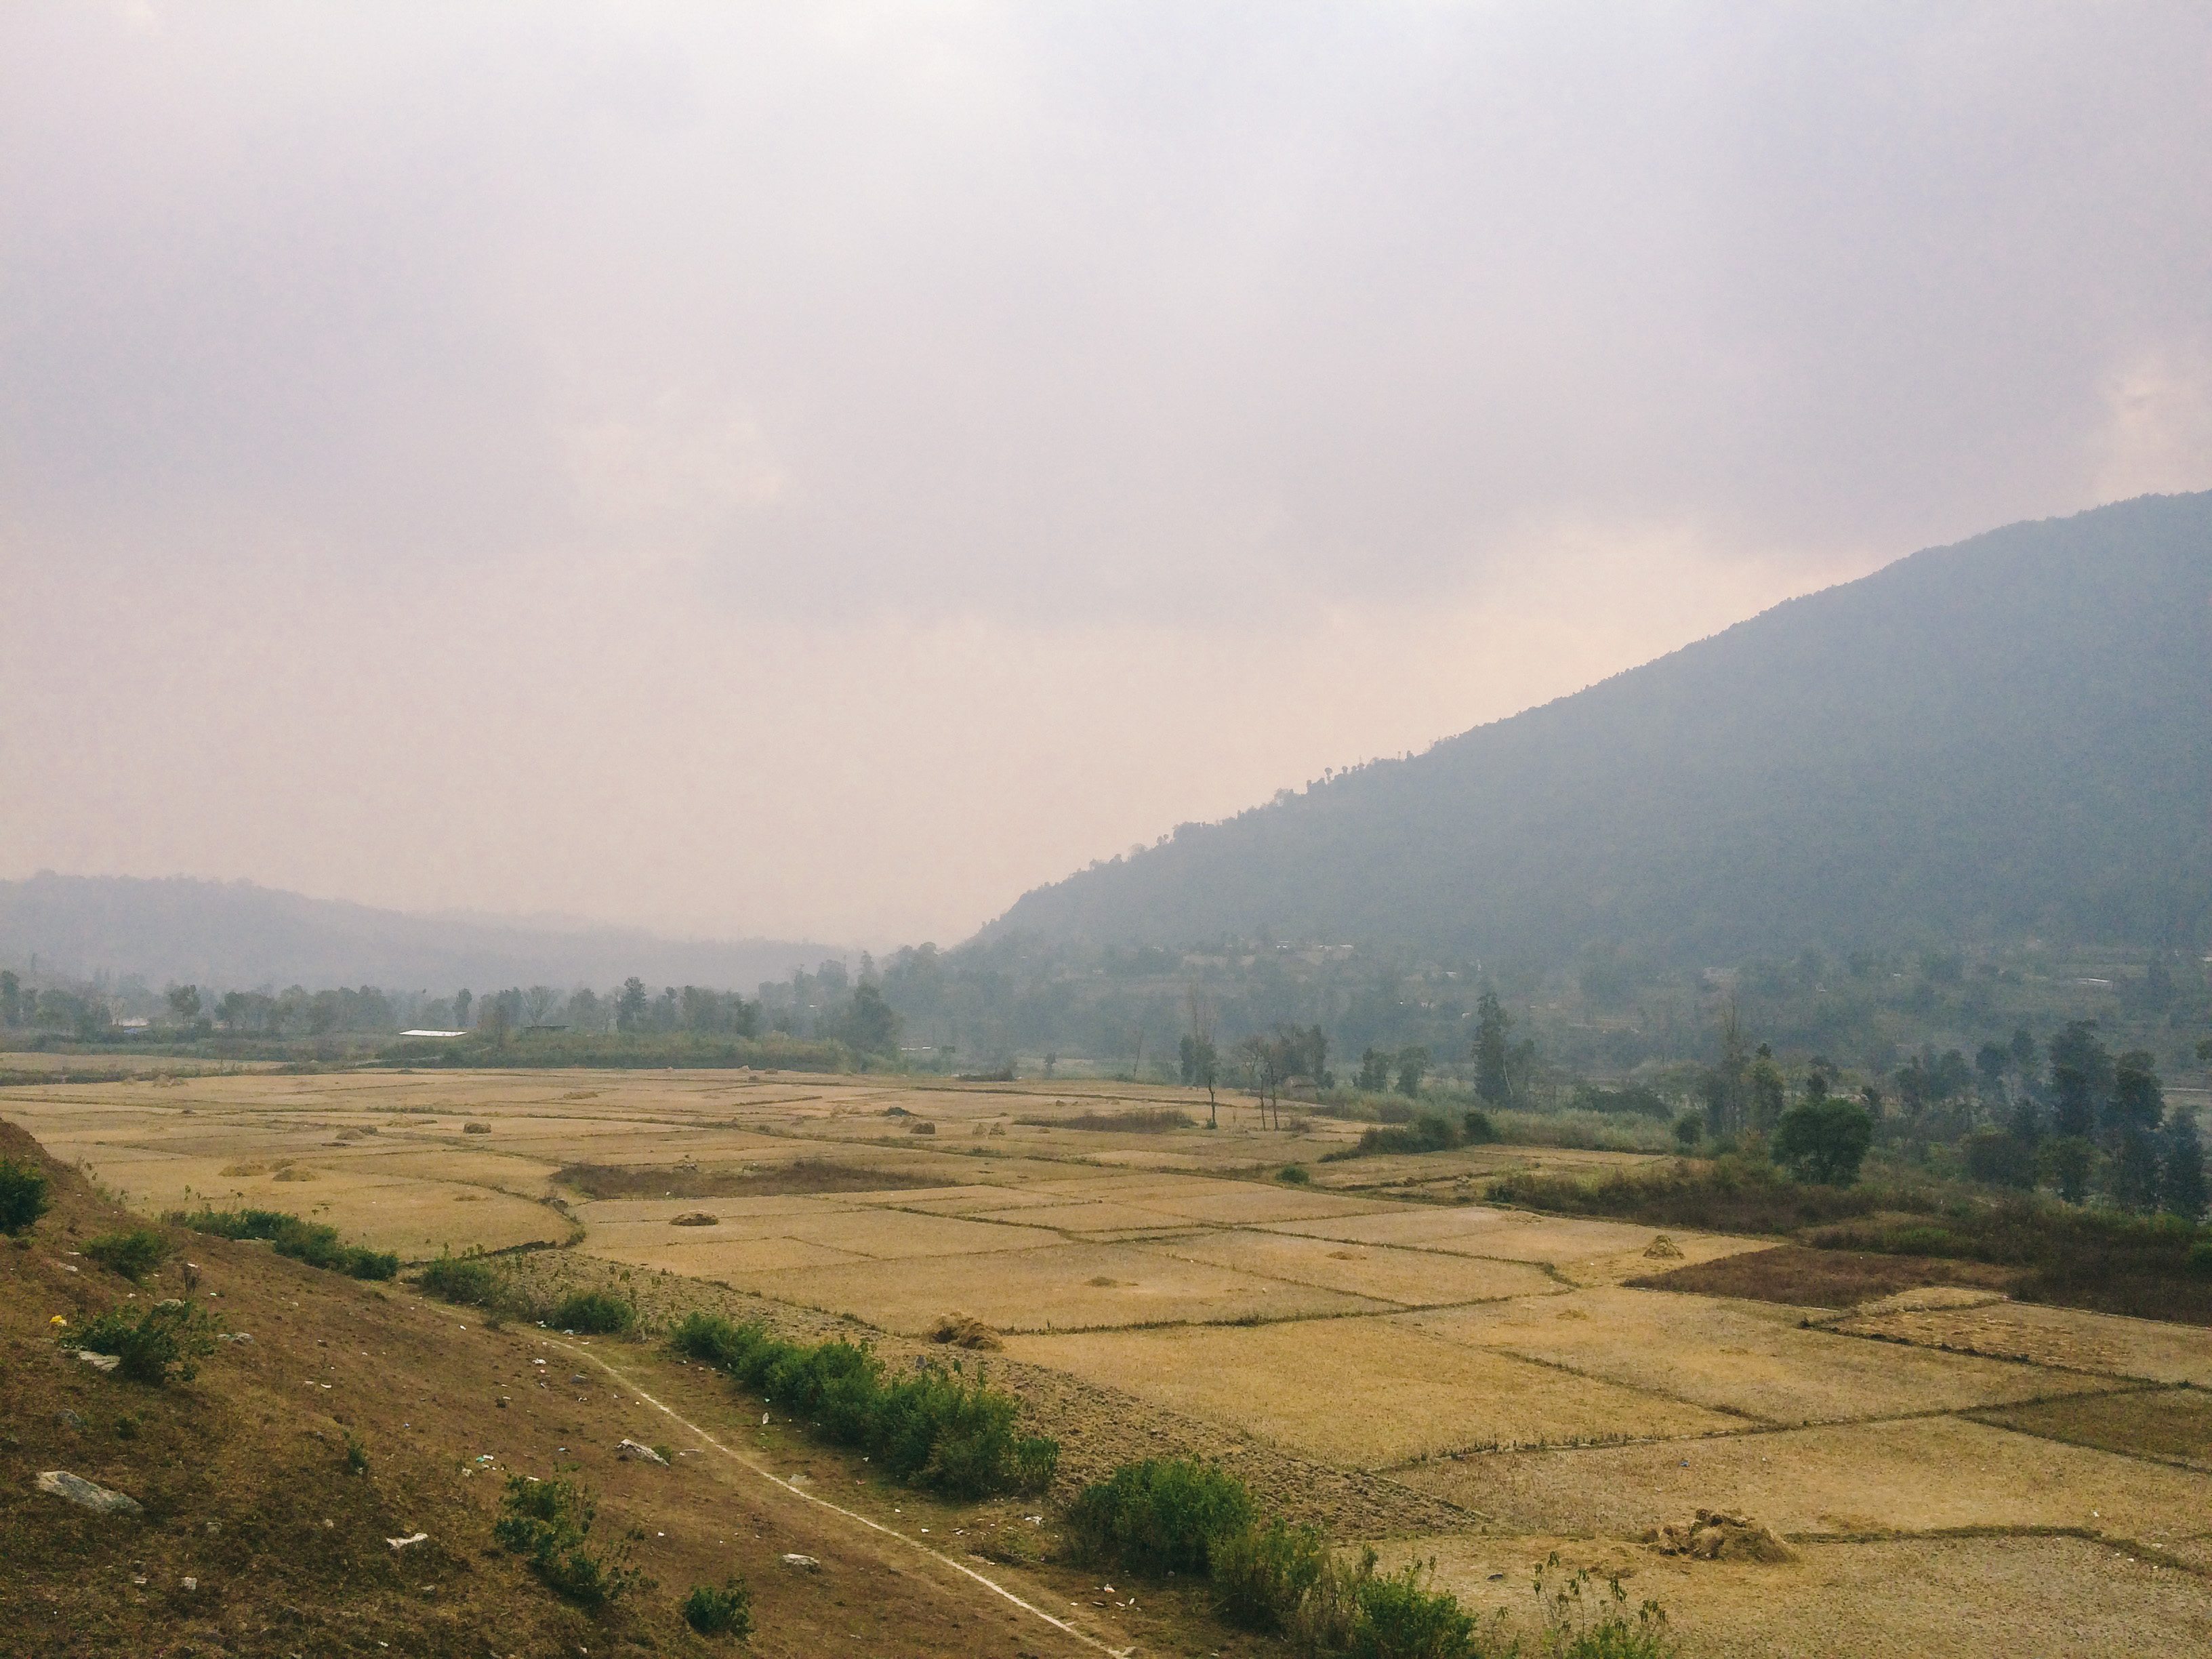 Khokana Field and Mountain View